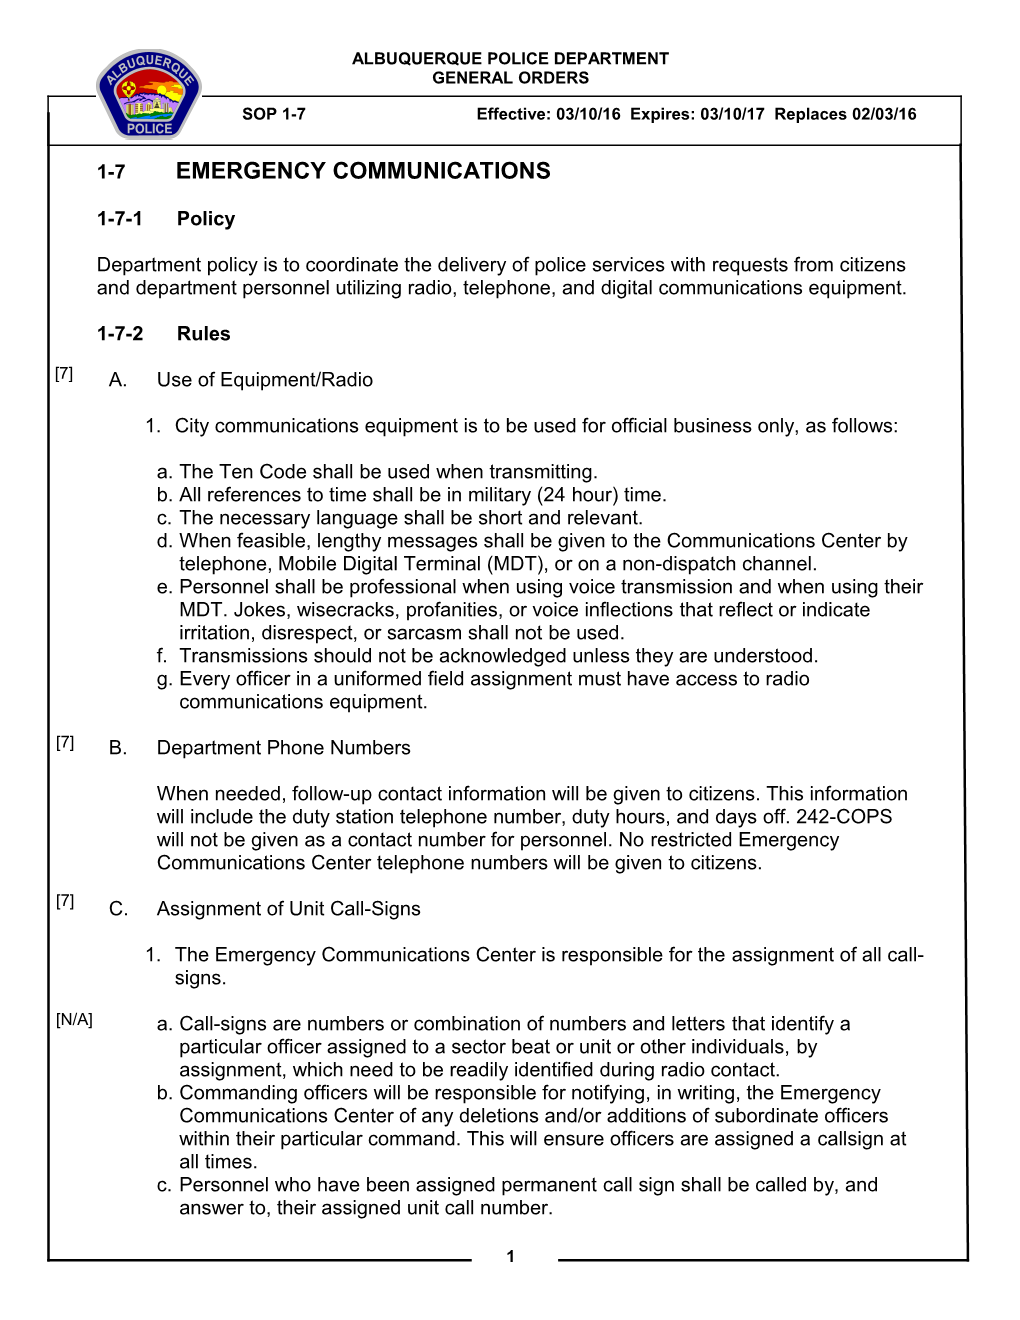 1-7 Emergency Communications